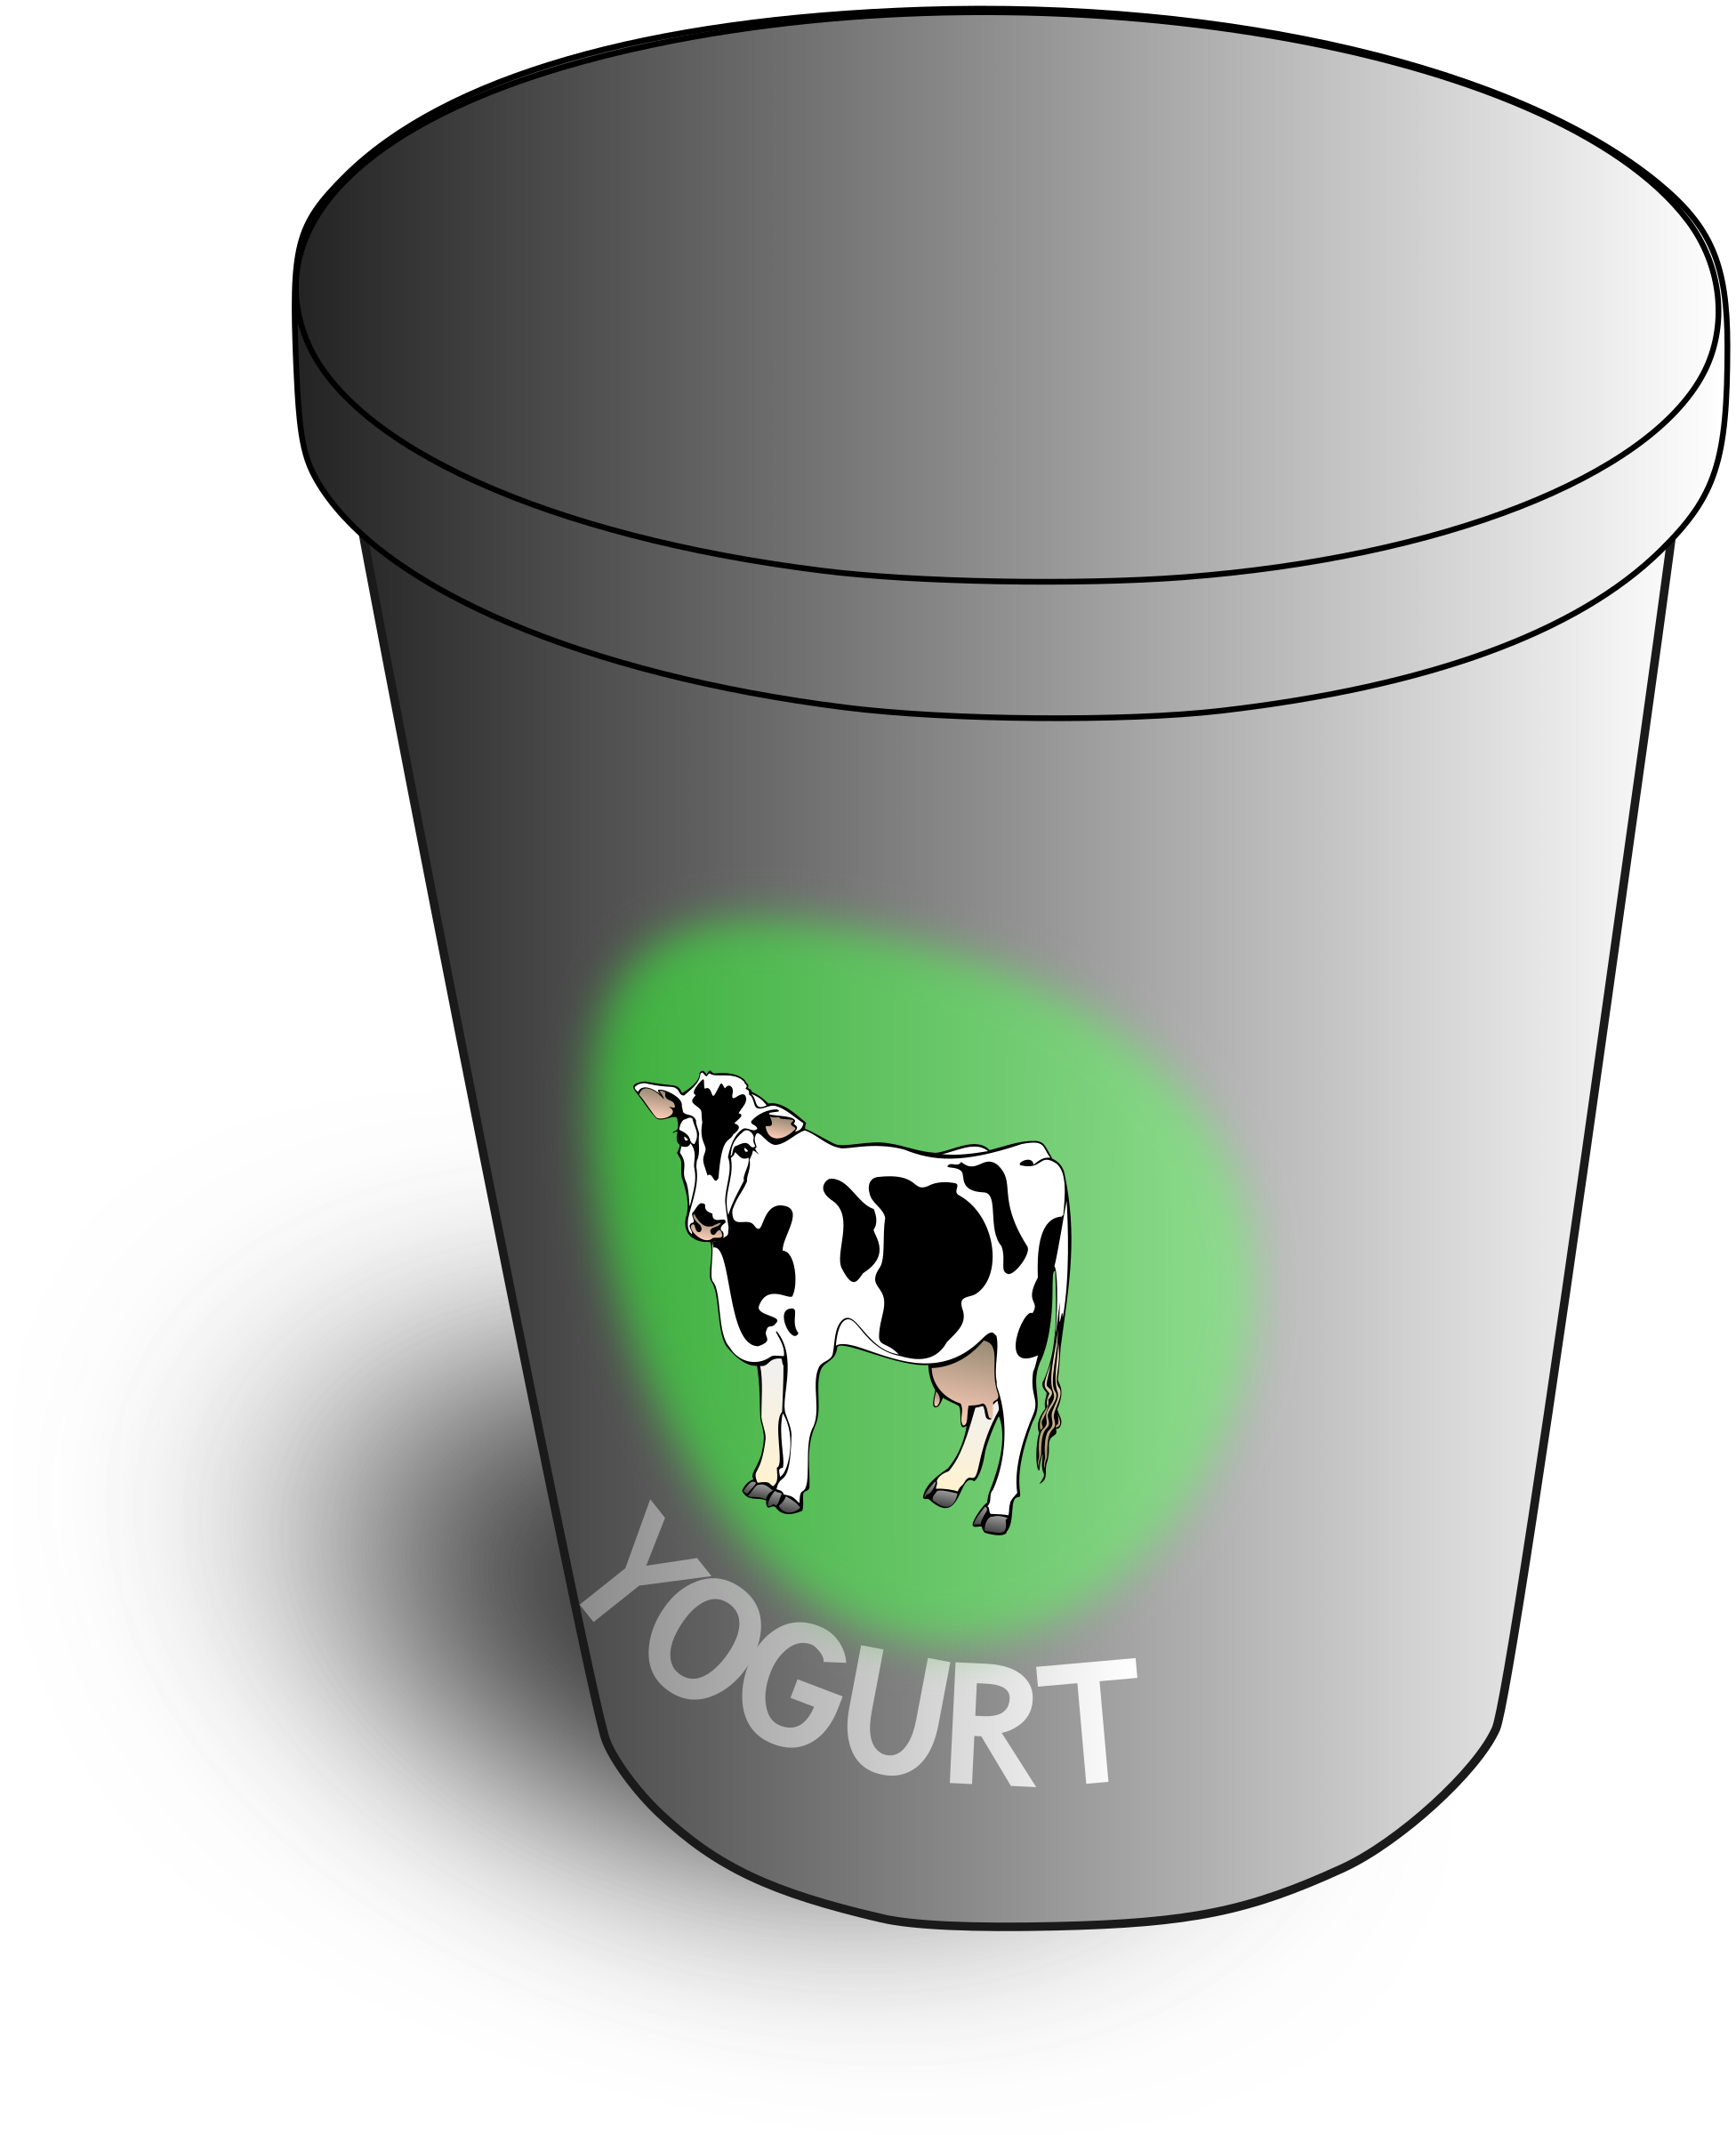 Yogurt Clipart Yogurt Clipart